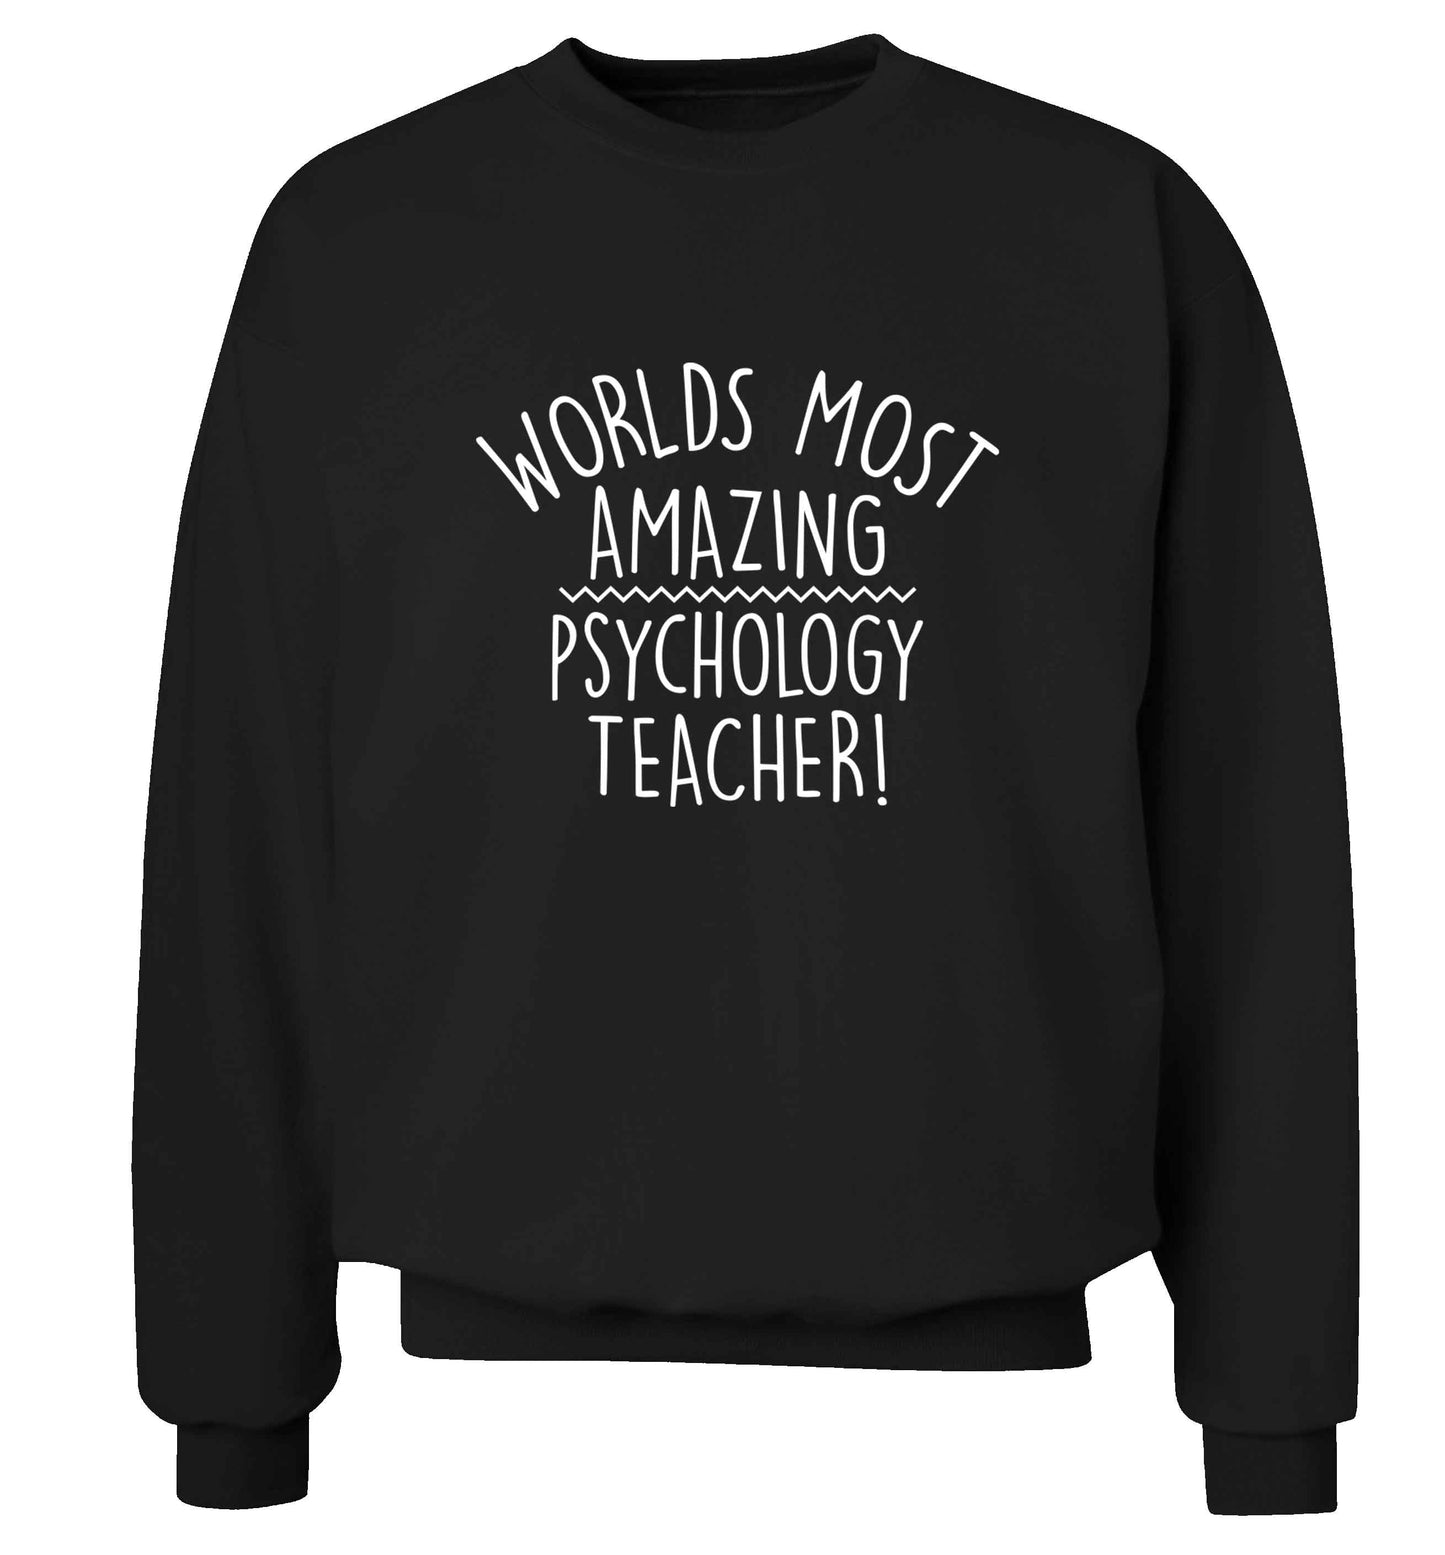 Worlds most amazing psychology teacher adult's unisex black sweater 2XL